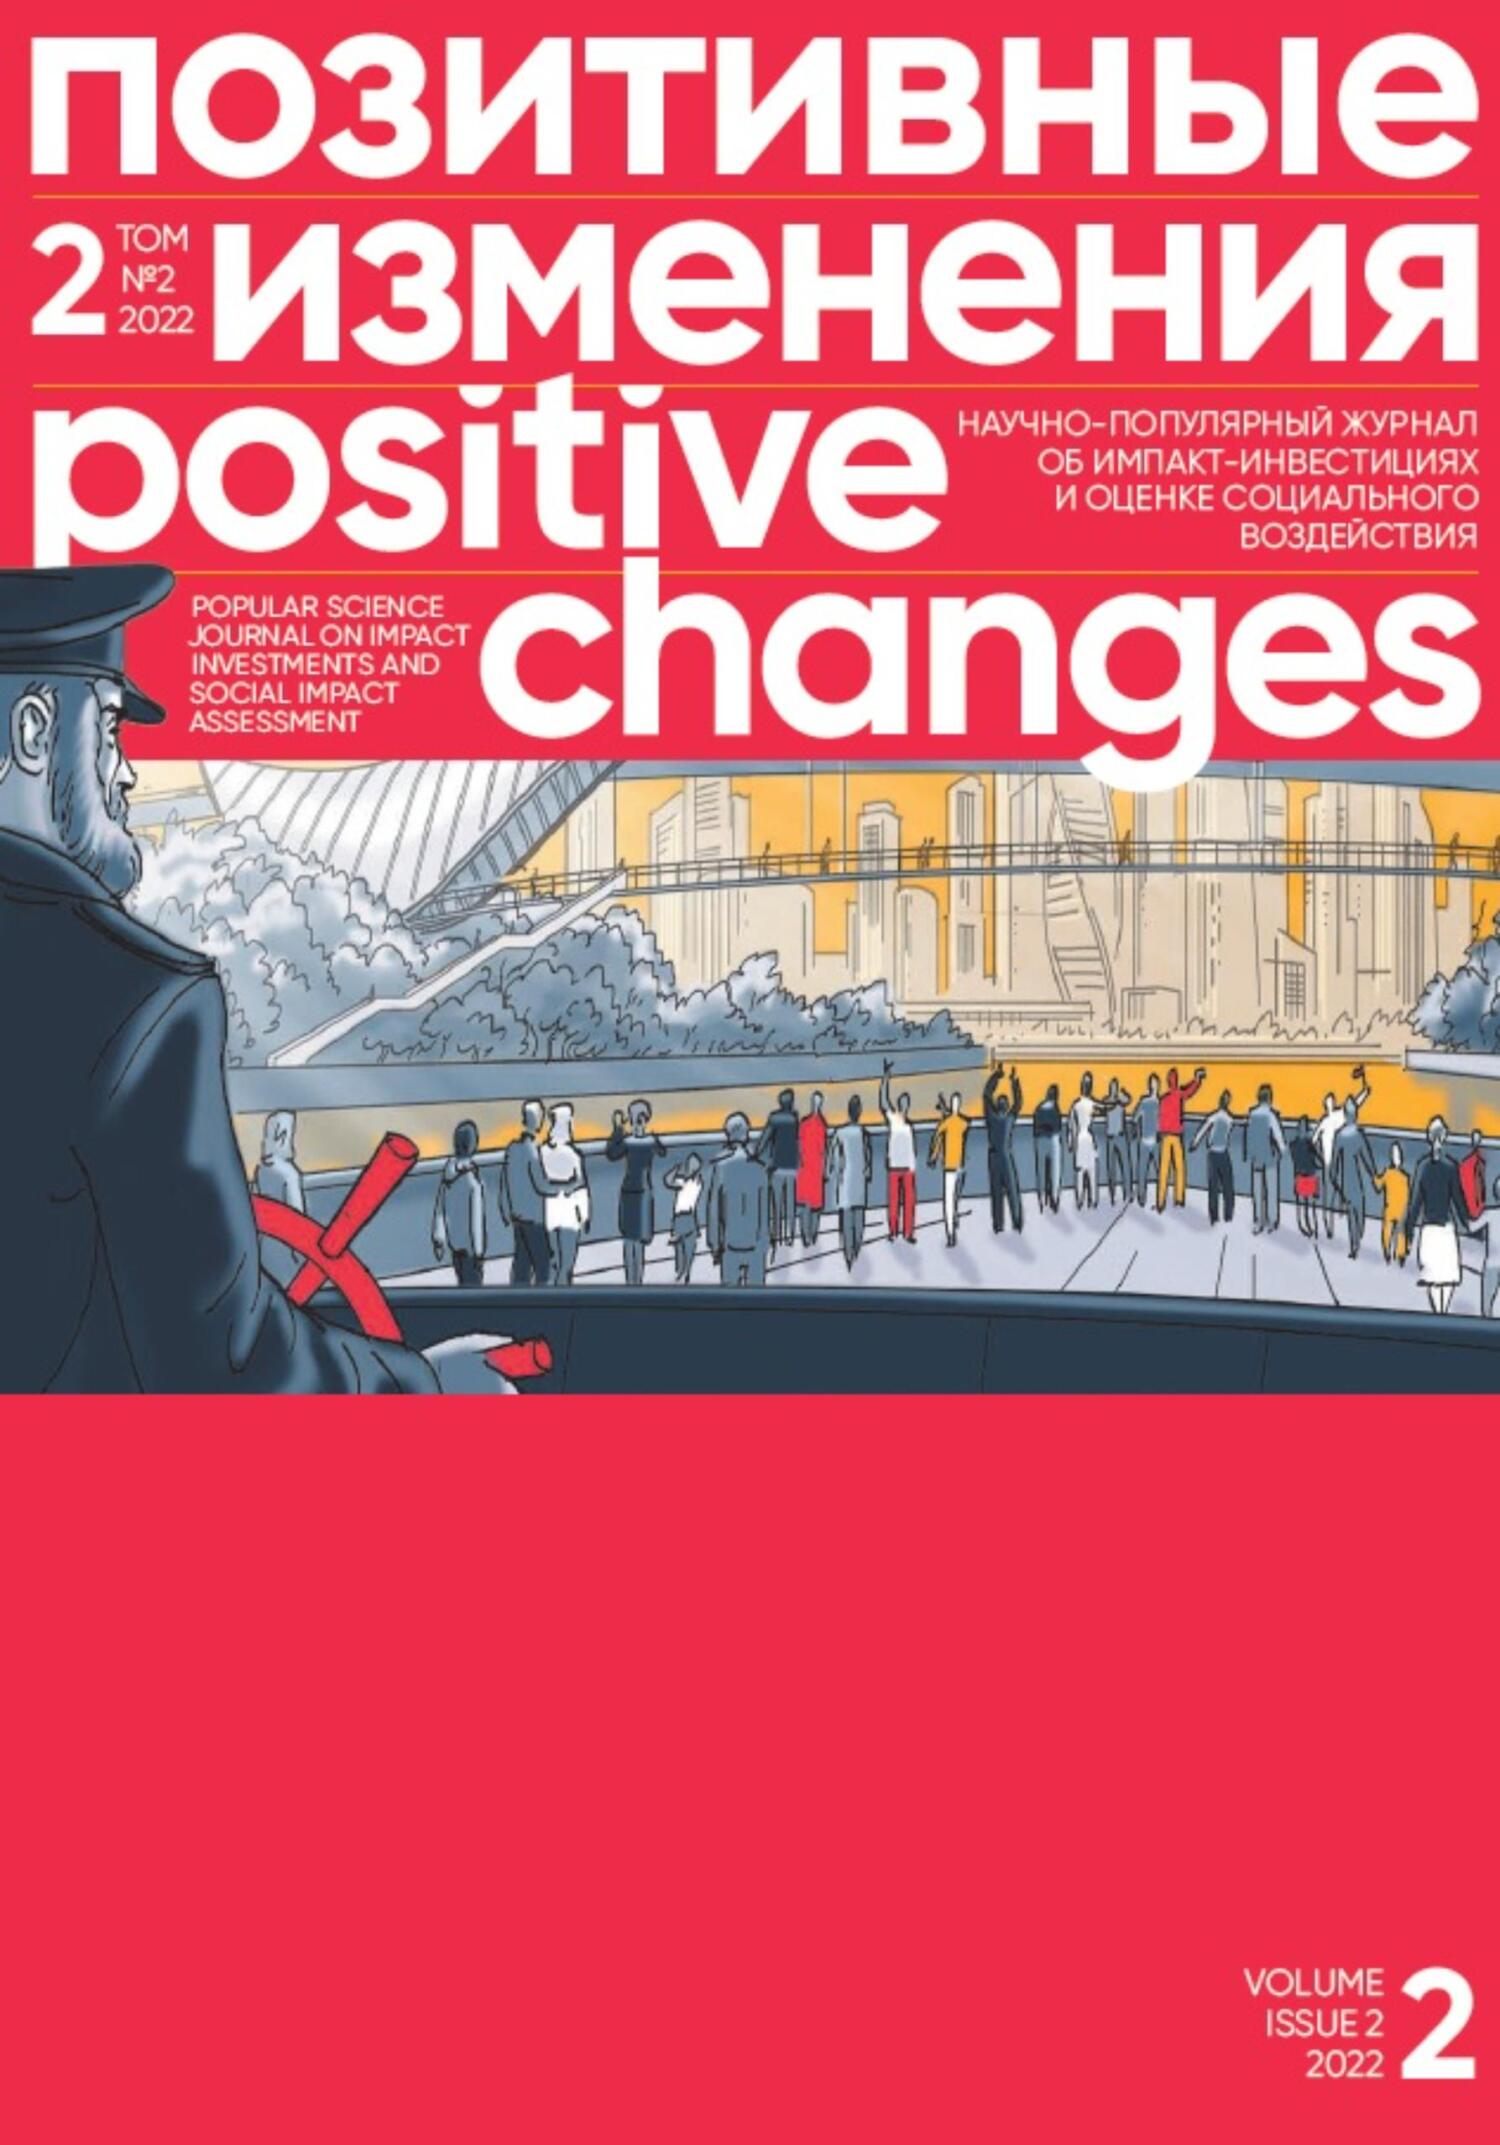 Позитивные изменения. Том 2, № 2 (2022). Positive changes. Volume 2, Issue 2 (2022) - Редакция журнала «Позитивные изменения»